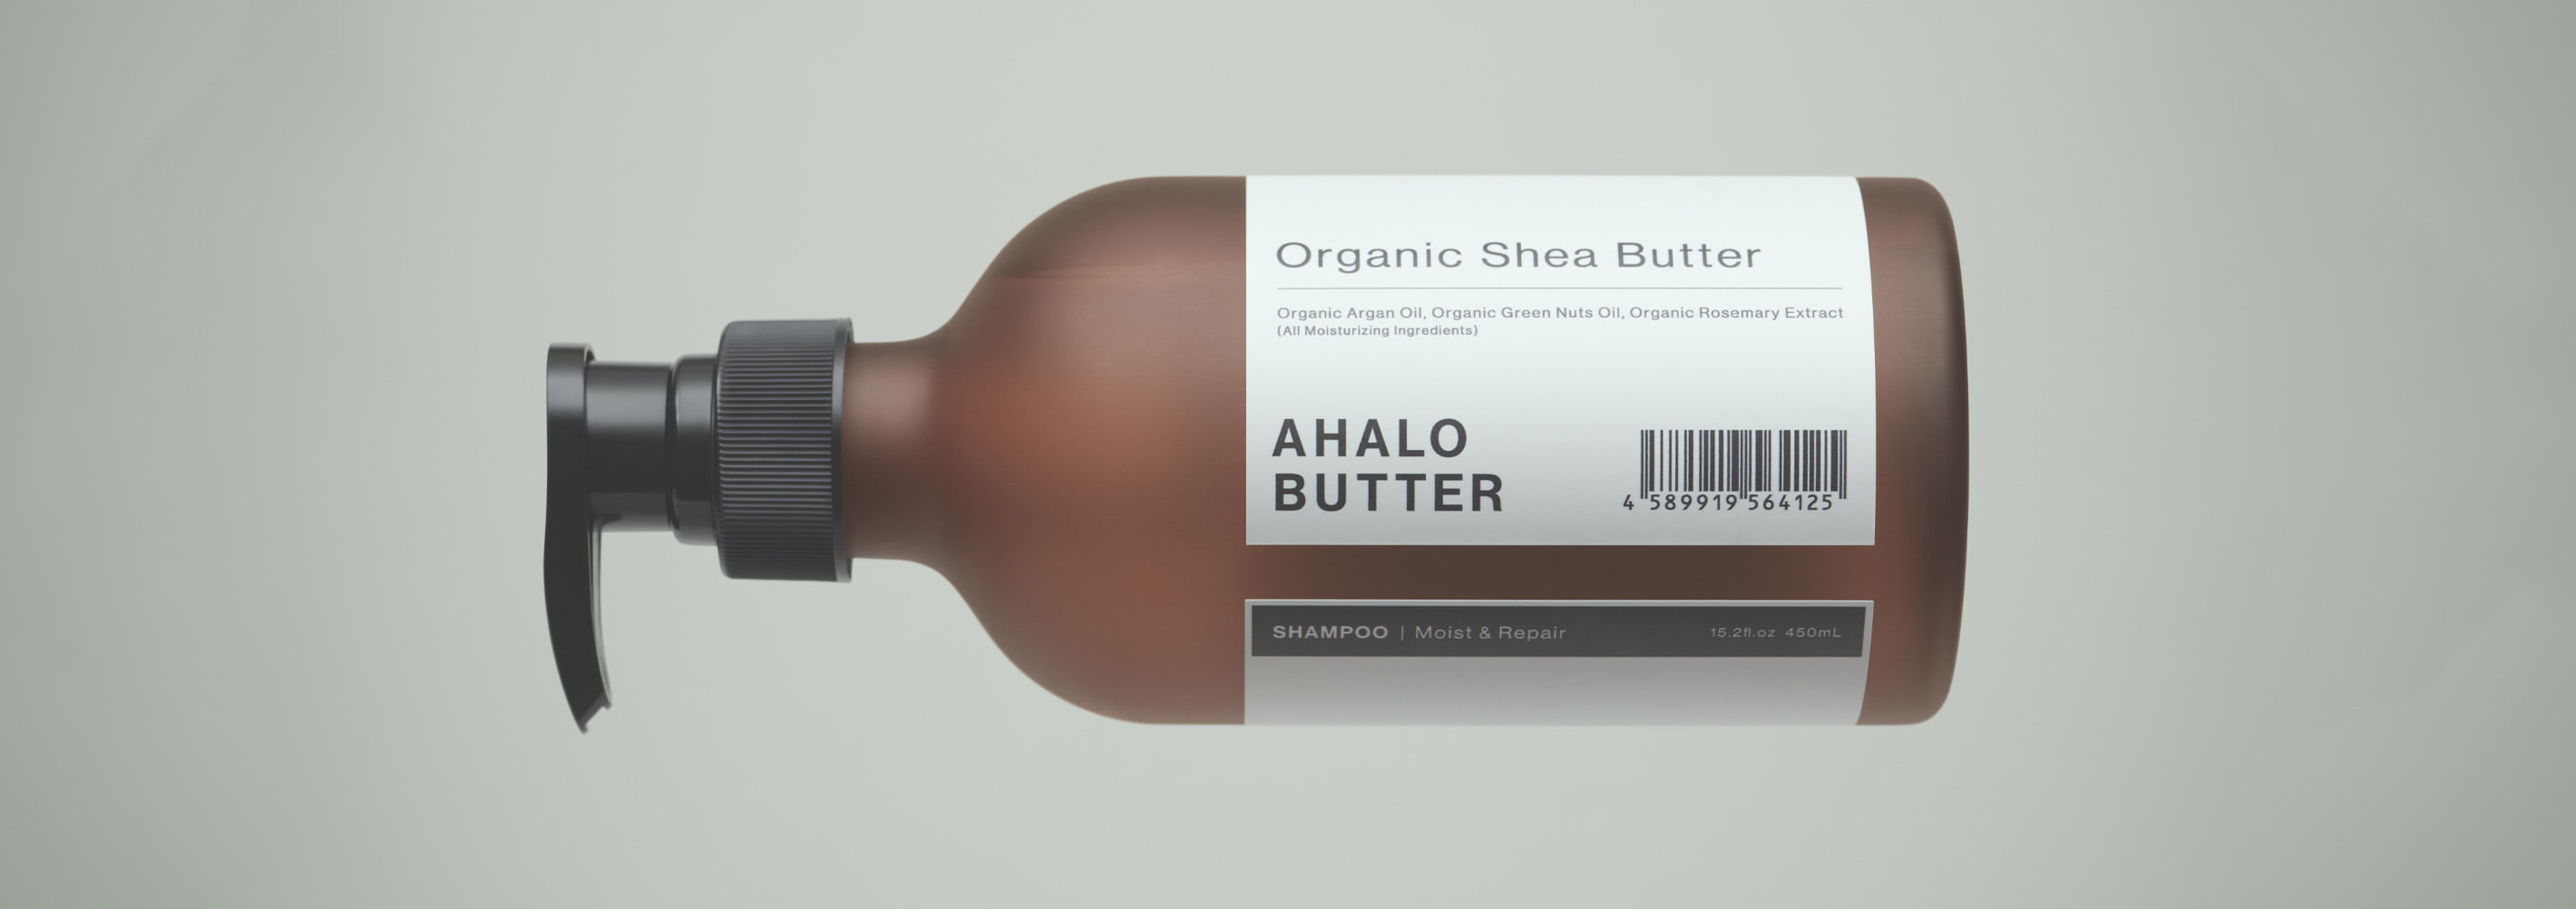 Products 公式 Ahalo Butter シアバターで贅沢に洗って 髪の質感変わる